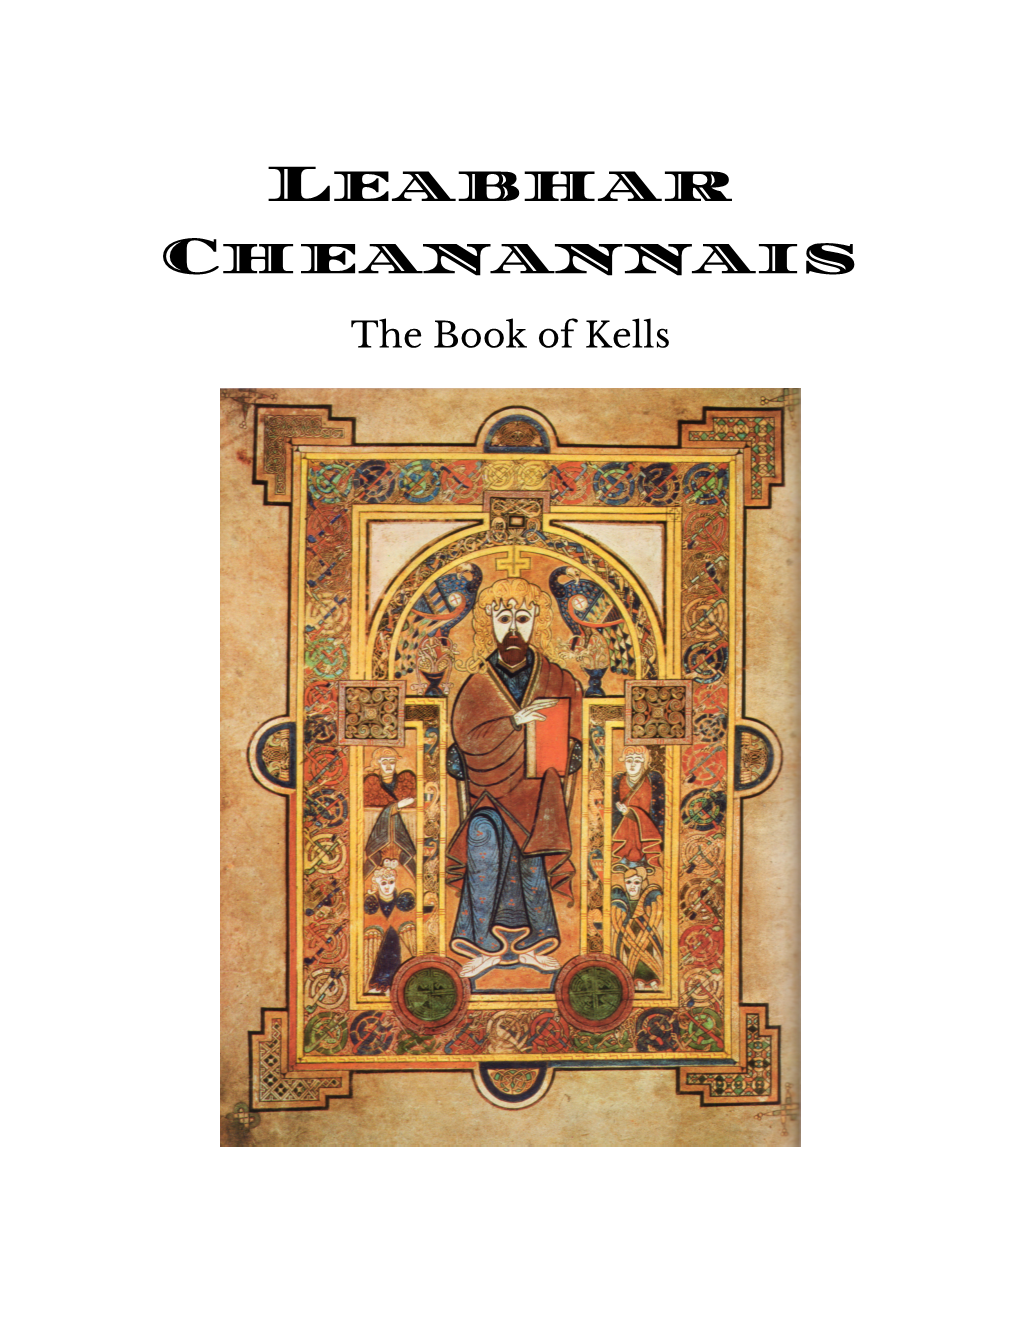 The Book of Kells Art Study